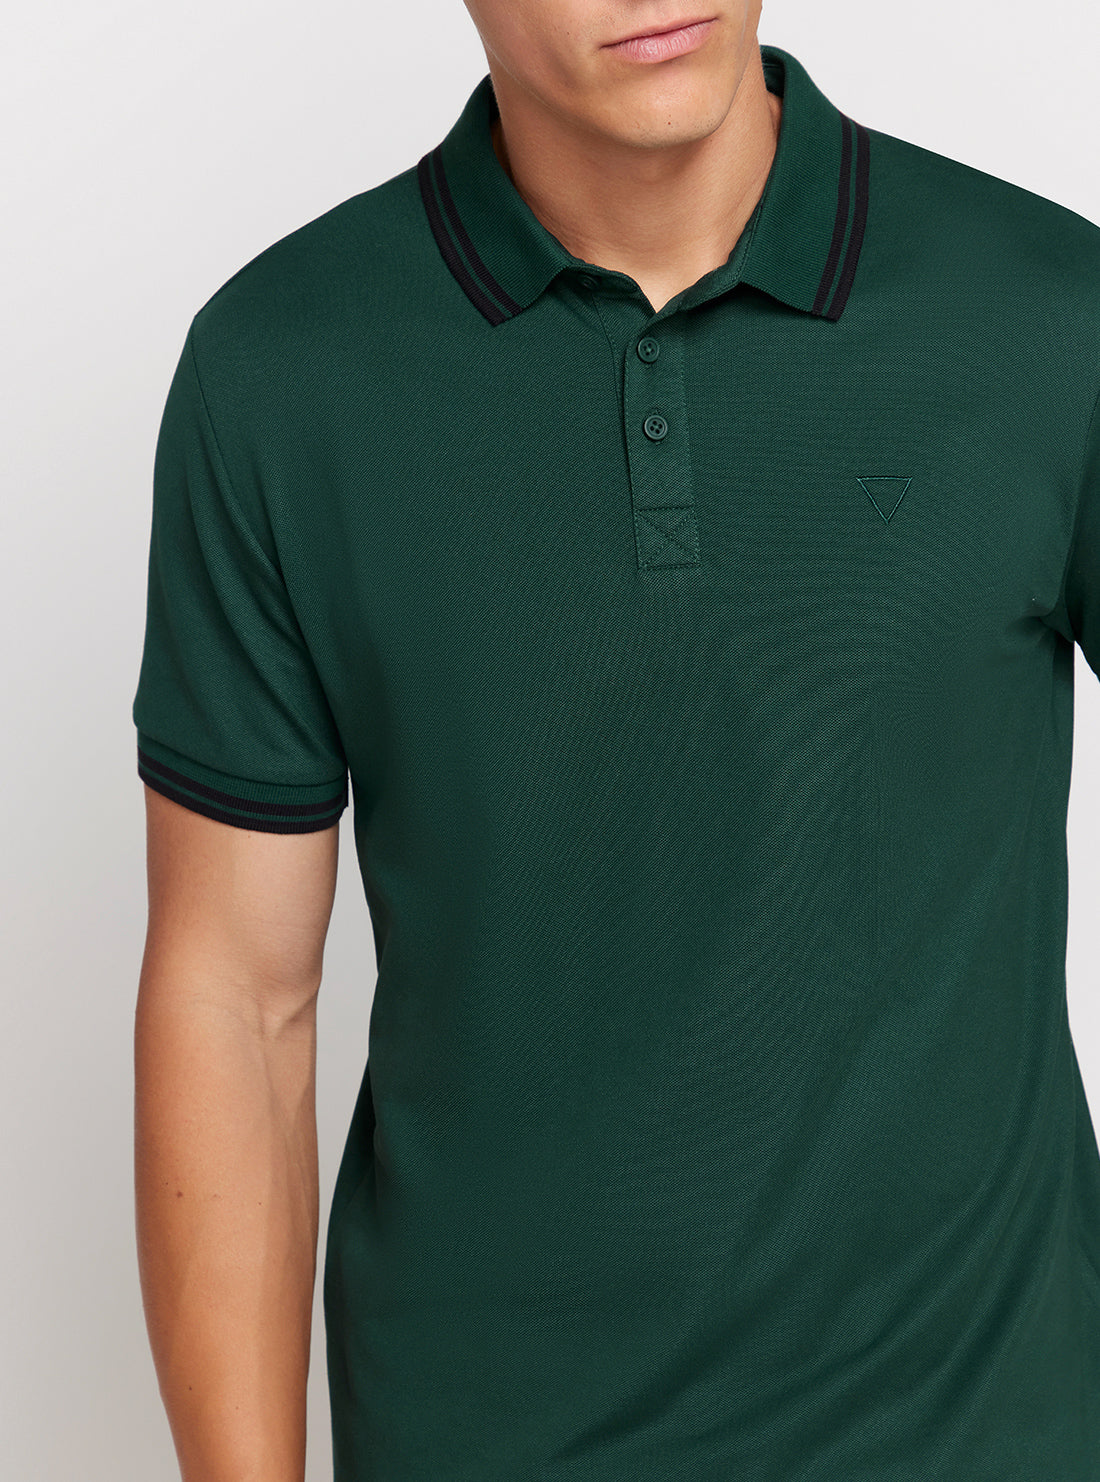 GUESS Green Short Sleeve Pique Polo Shirt detail view